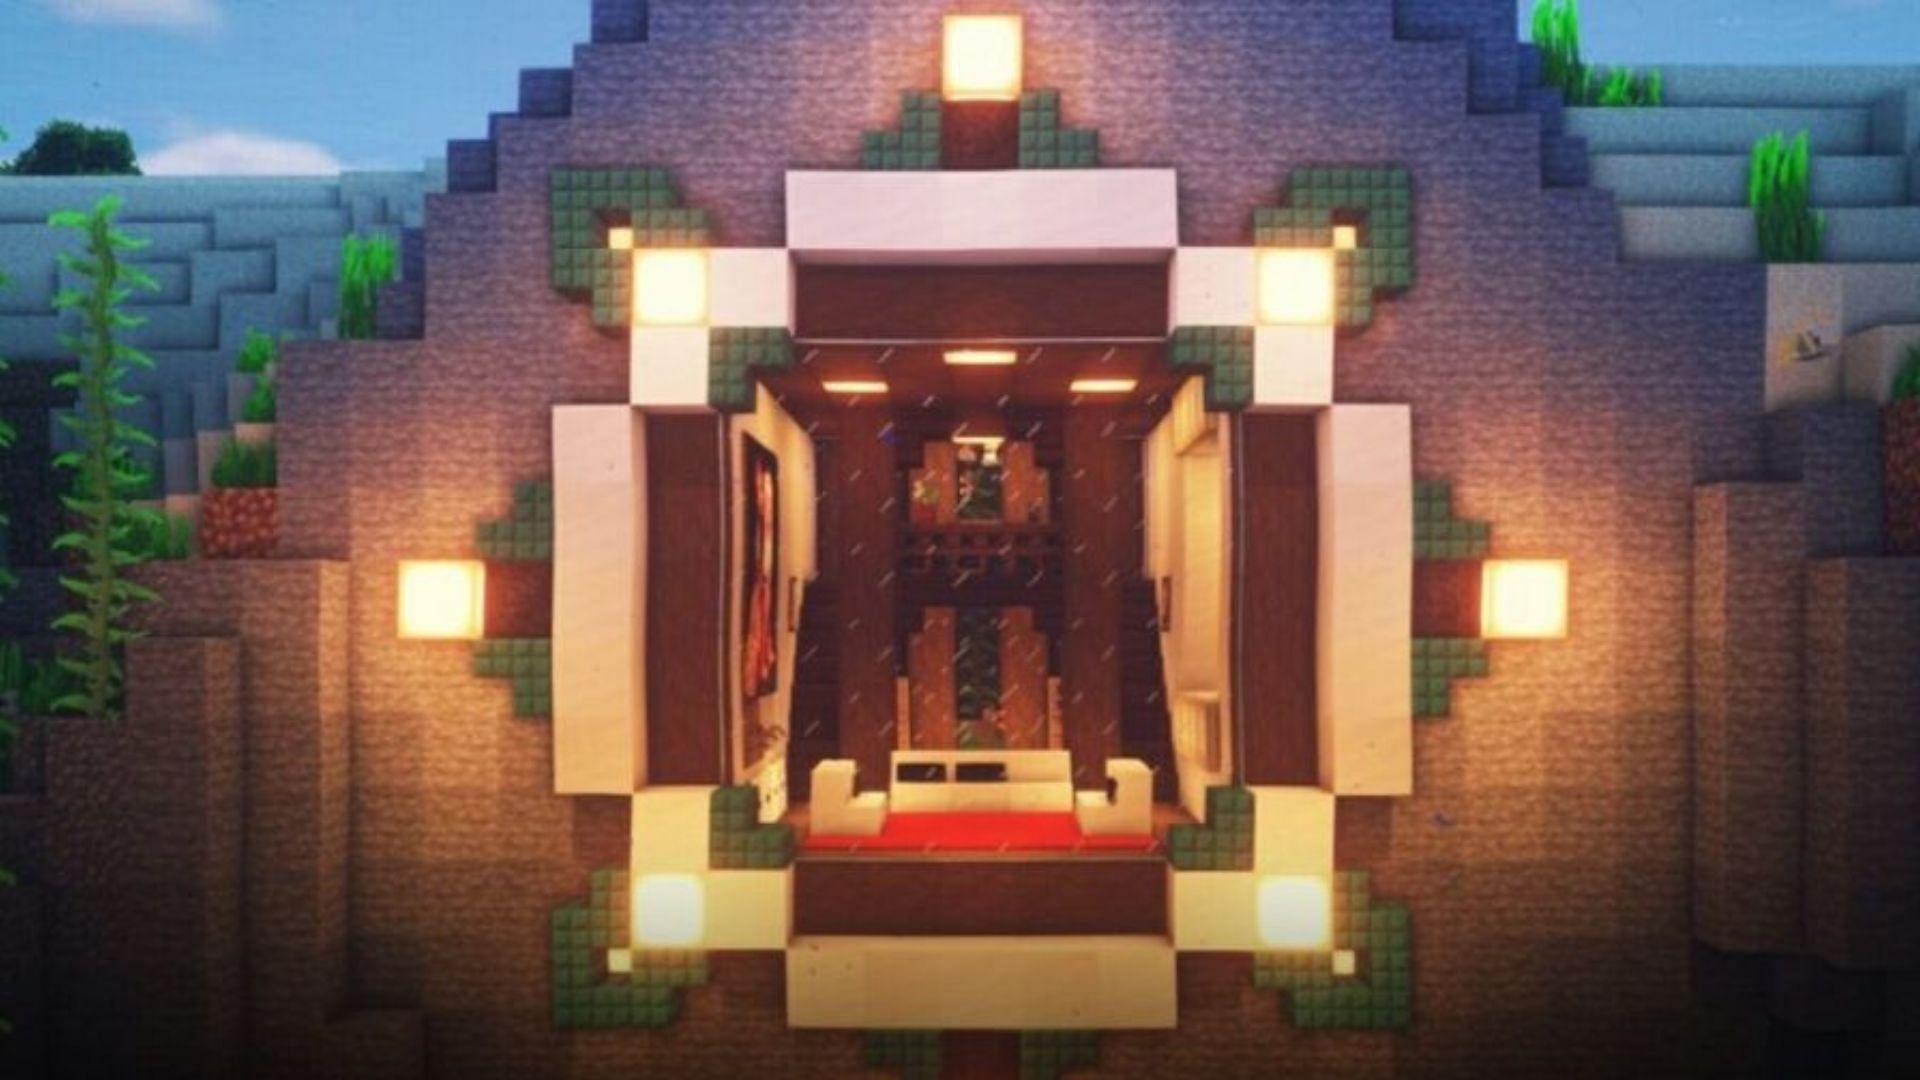 Underwater mountain house in Minecraft (Image via Mojang Studios)